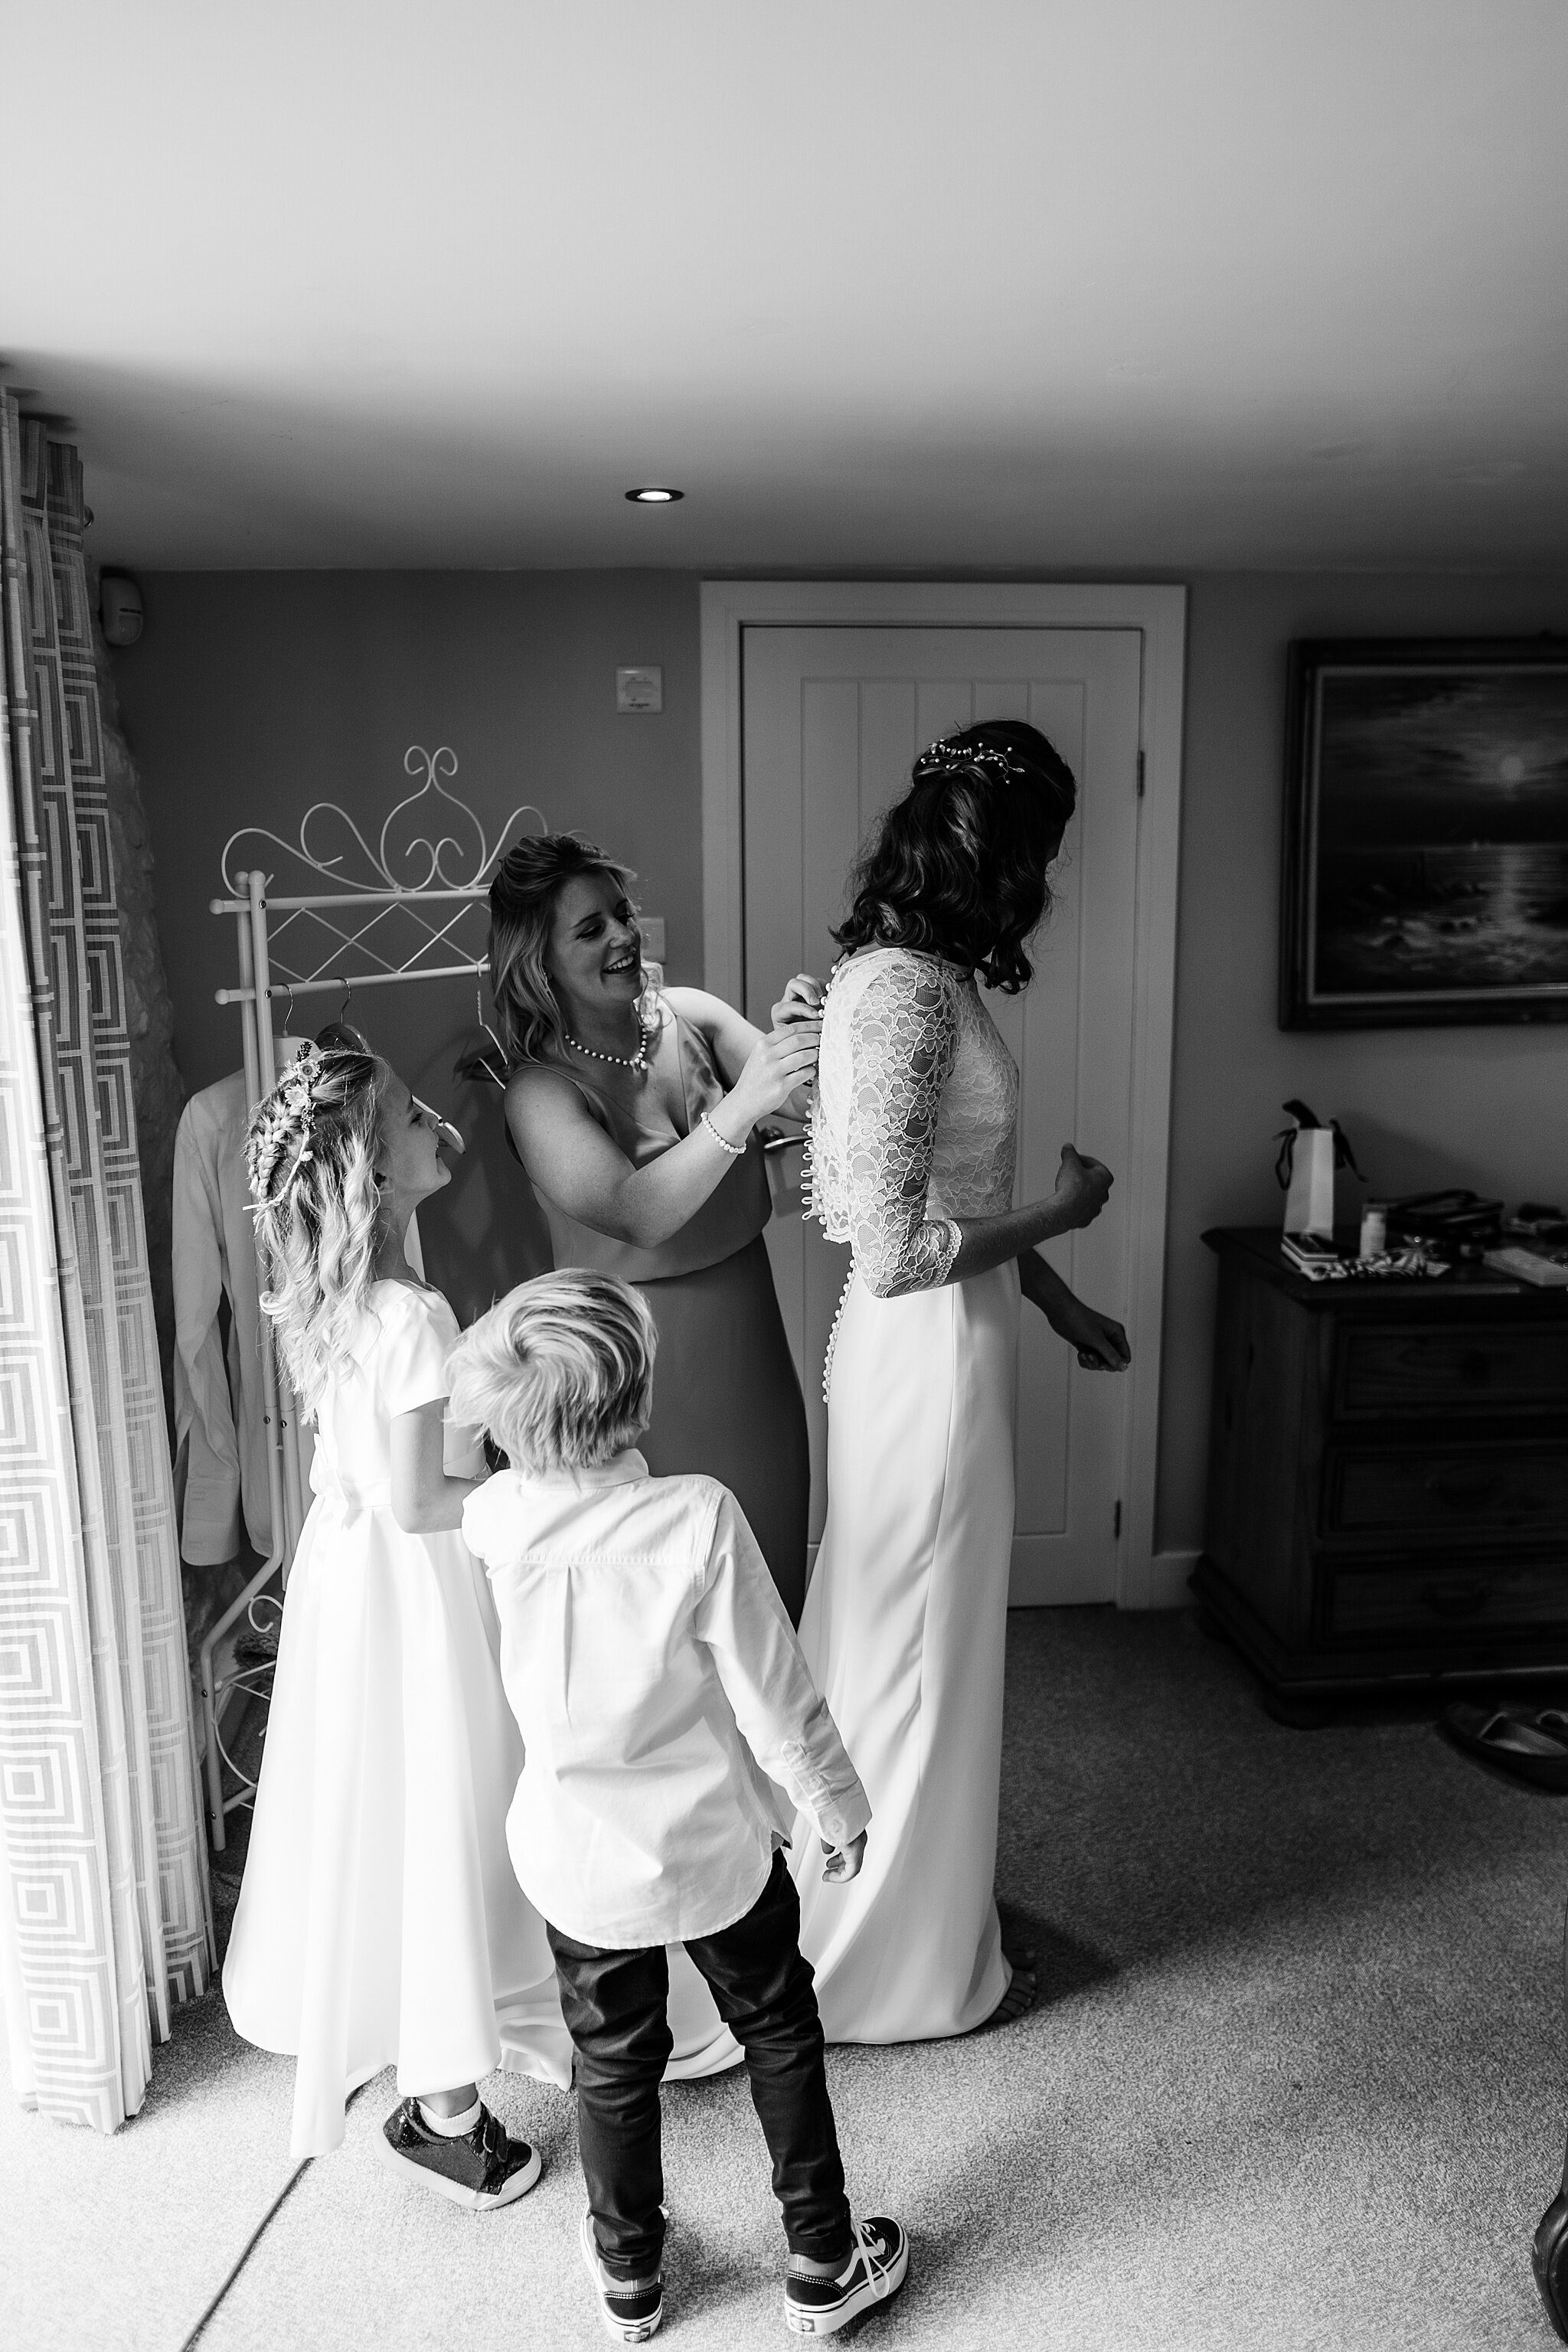 Military church wedding, Kent wedding photographer, documentary wedding photography